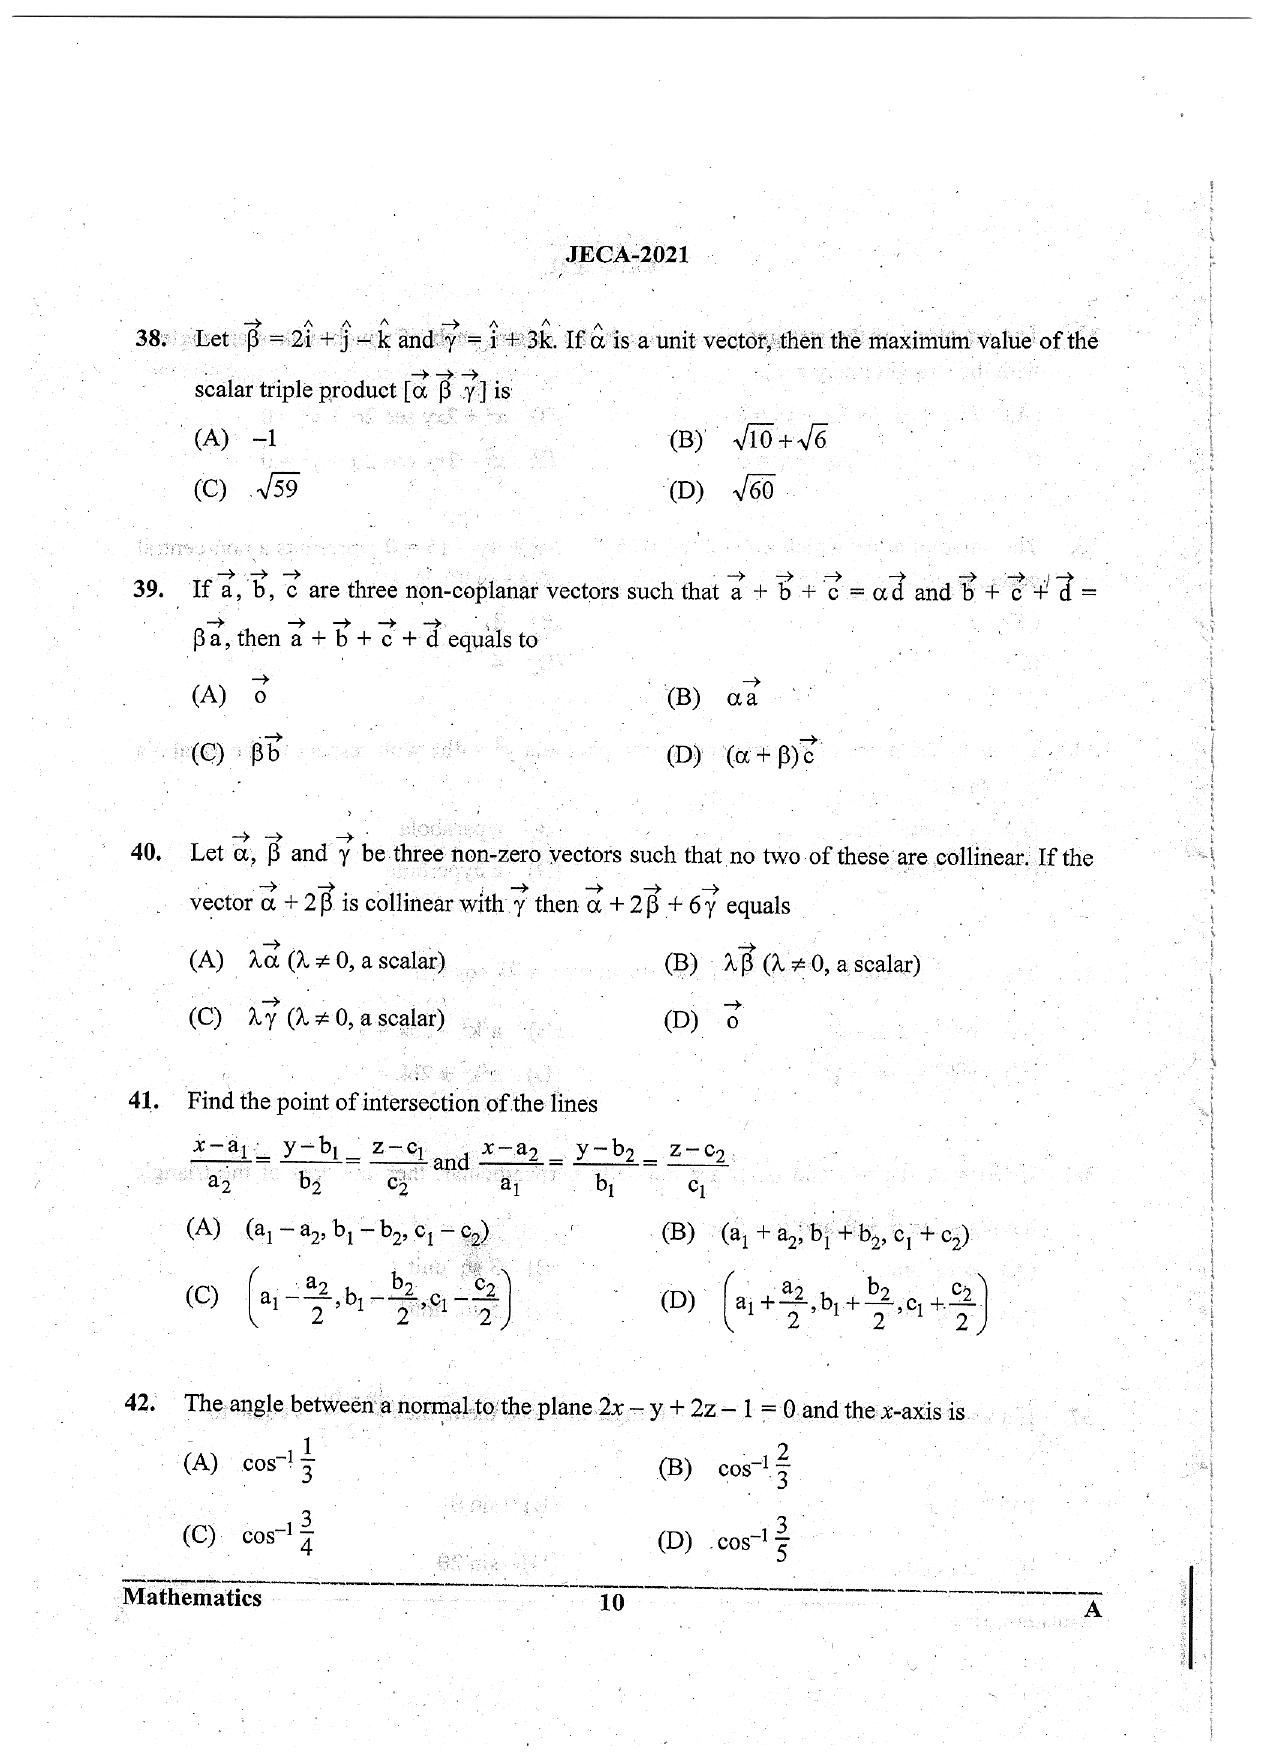 WB JECA 2021 Mathematics Question Paper - Page 10